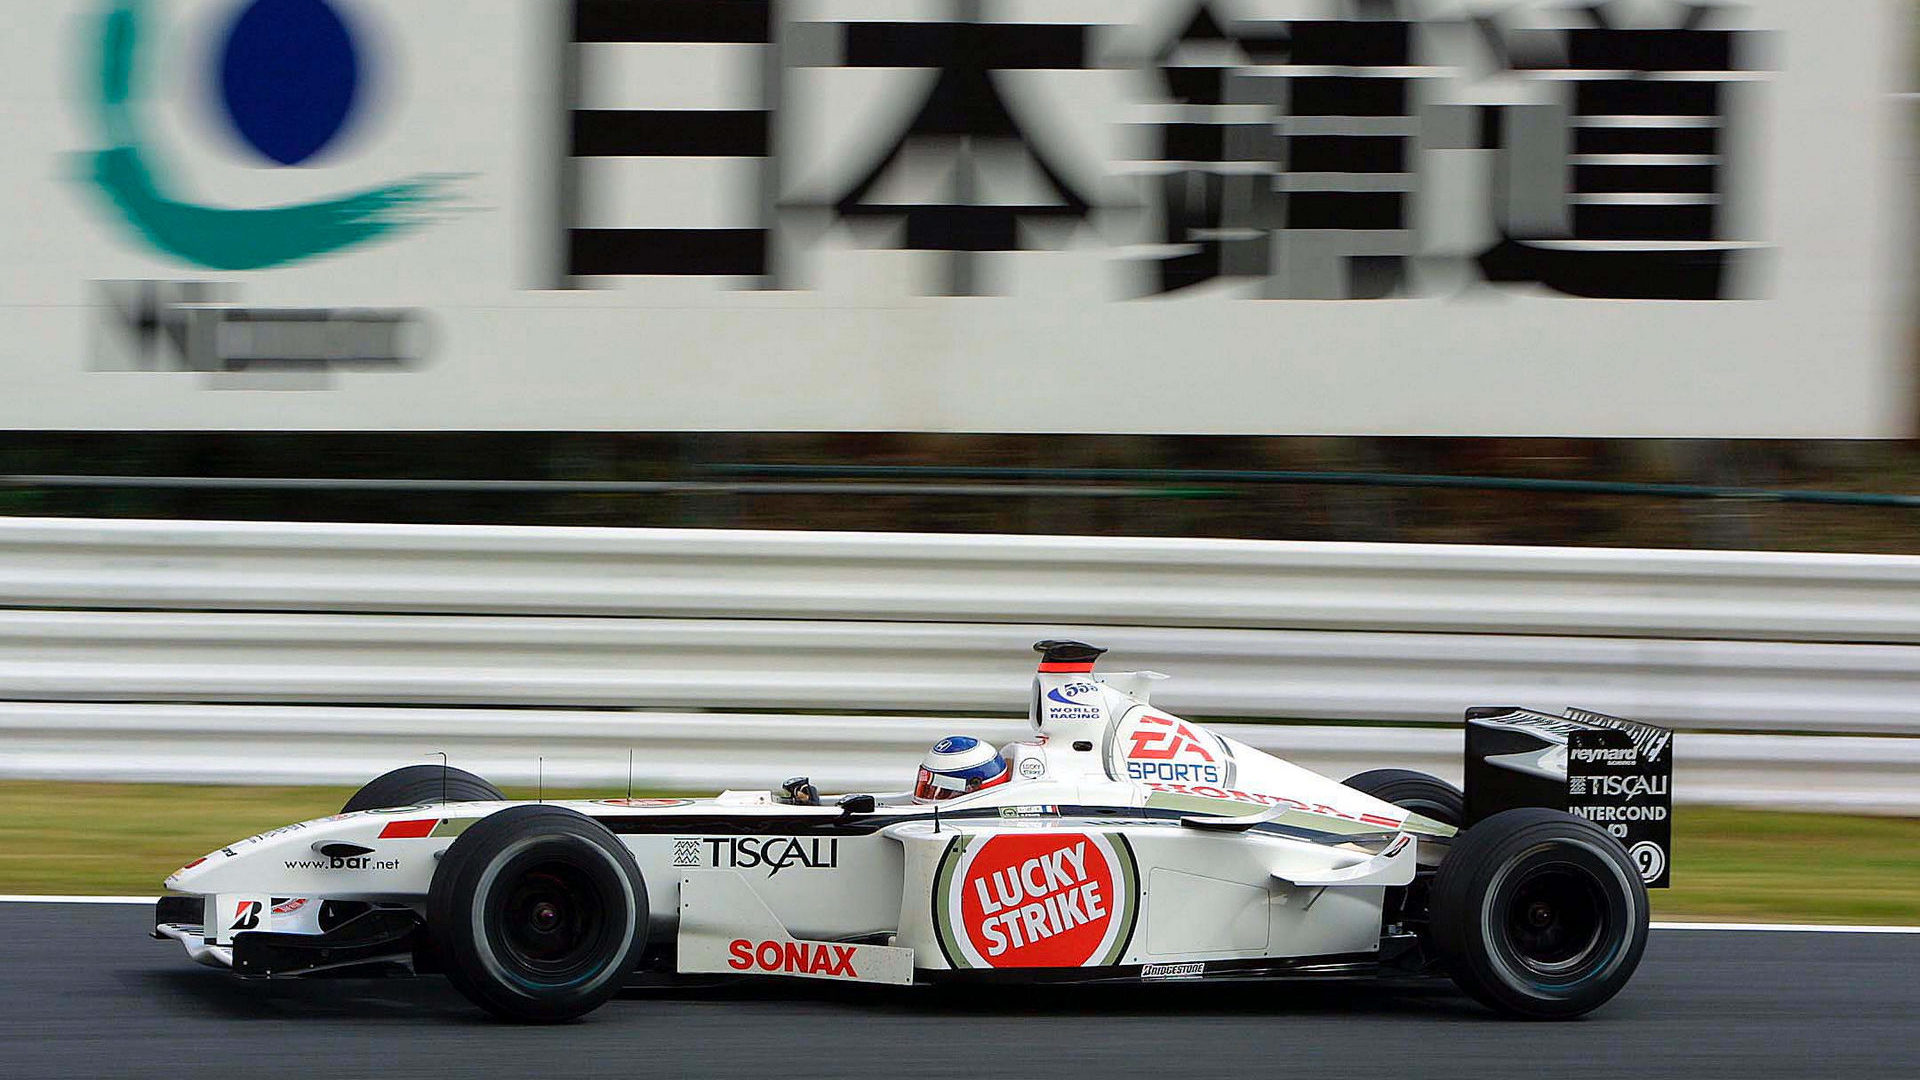 HD Wallpapers 2001 Formula 1 Grand Prix of Japan | F1 Fansite